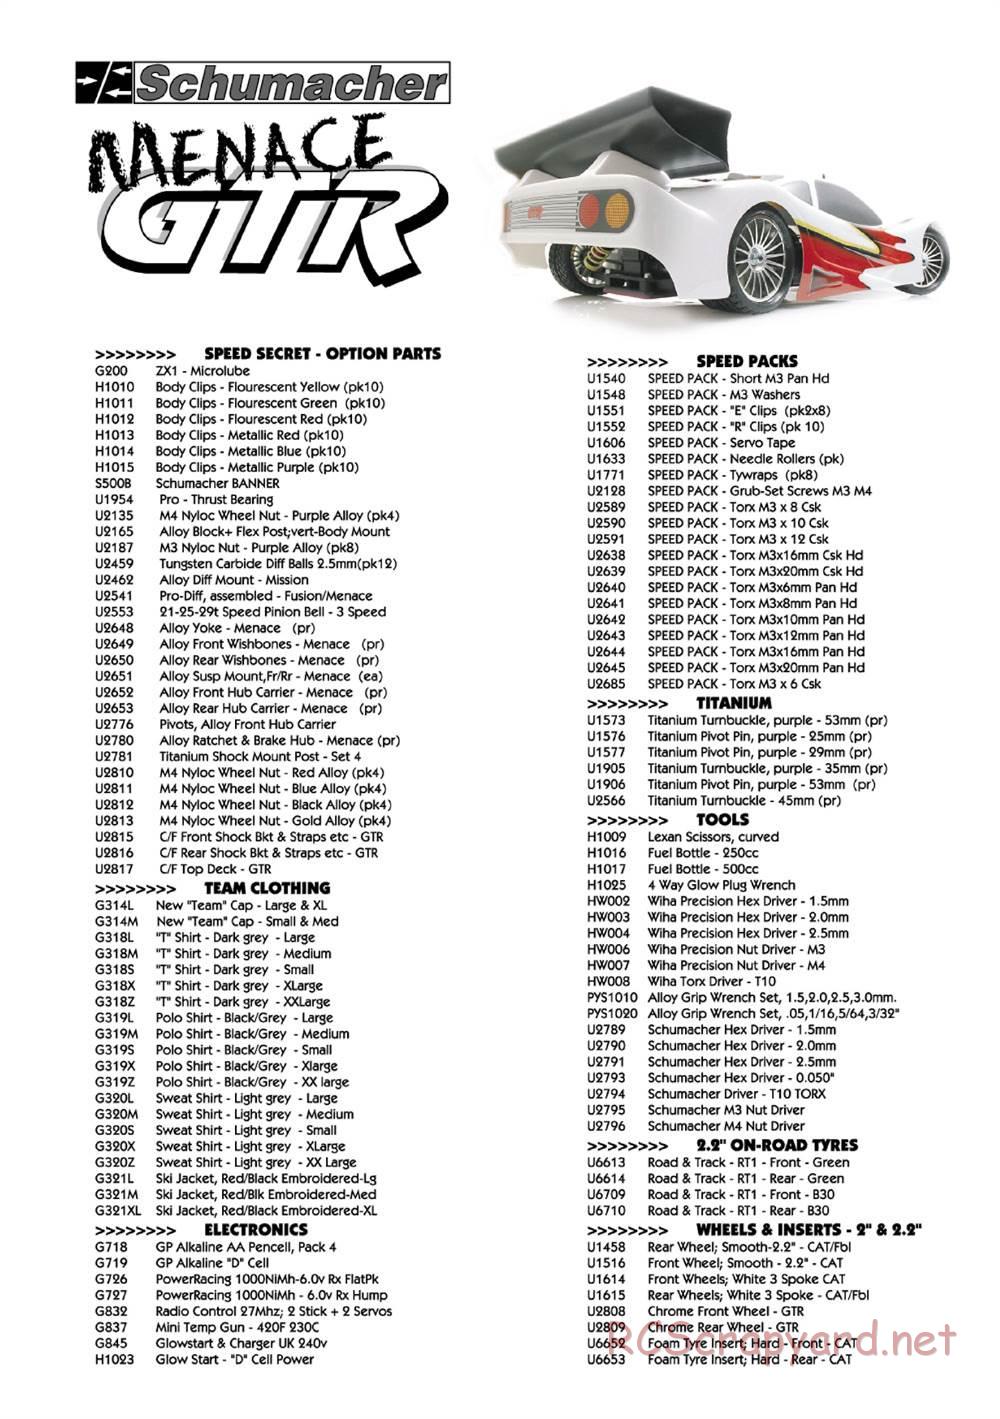 Schumacher - Menace GTR - Manual - Page 28